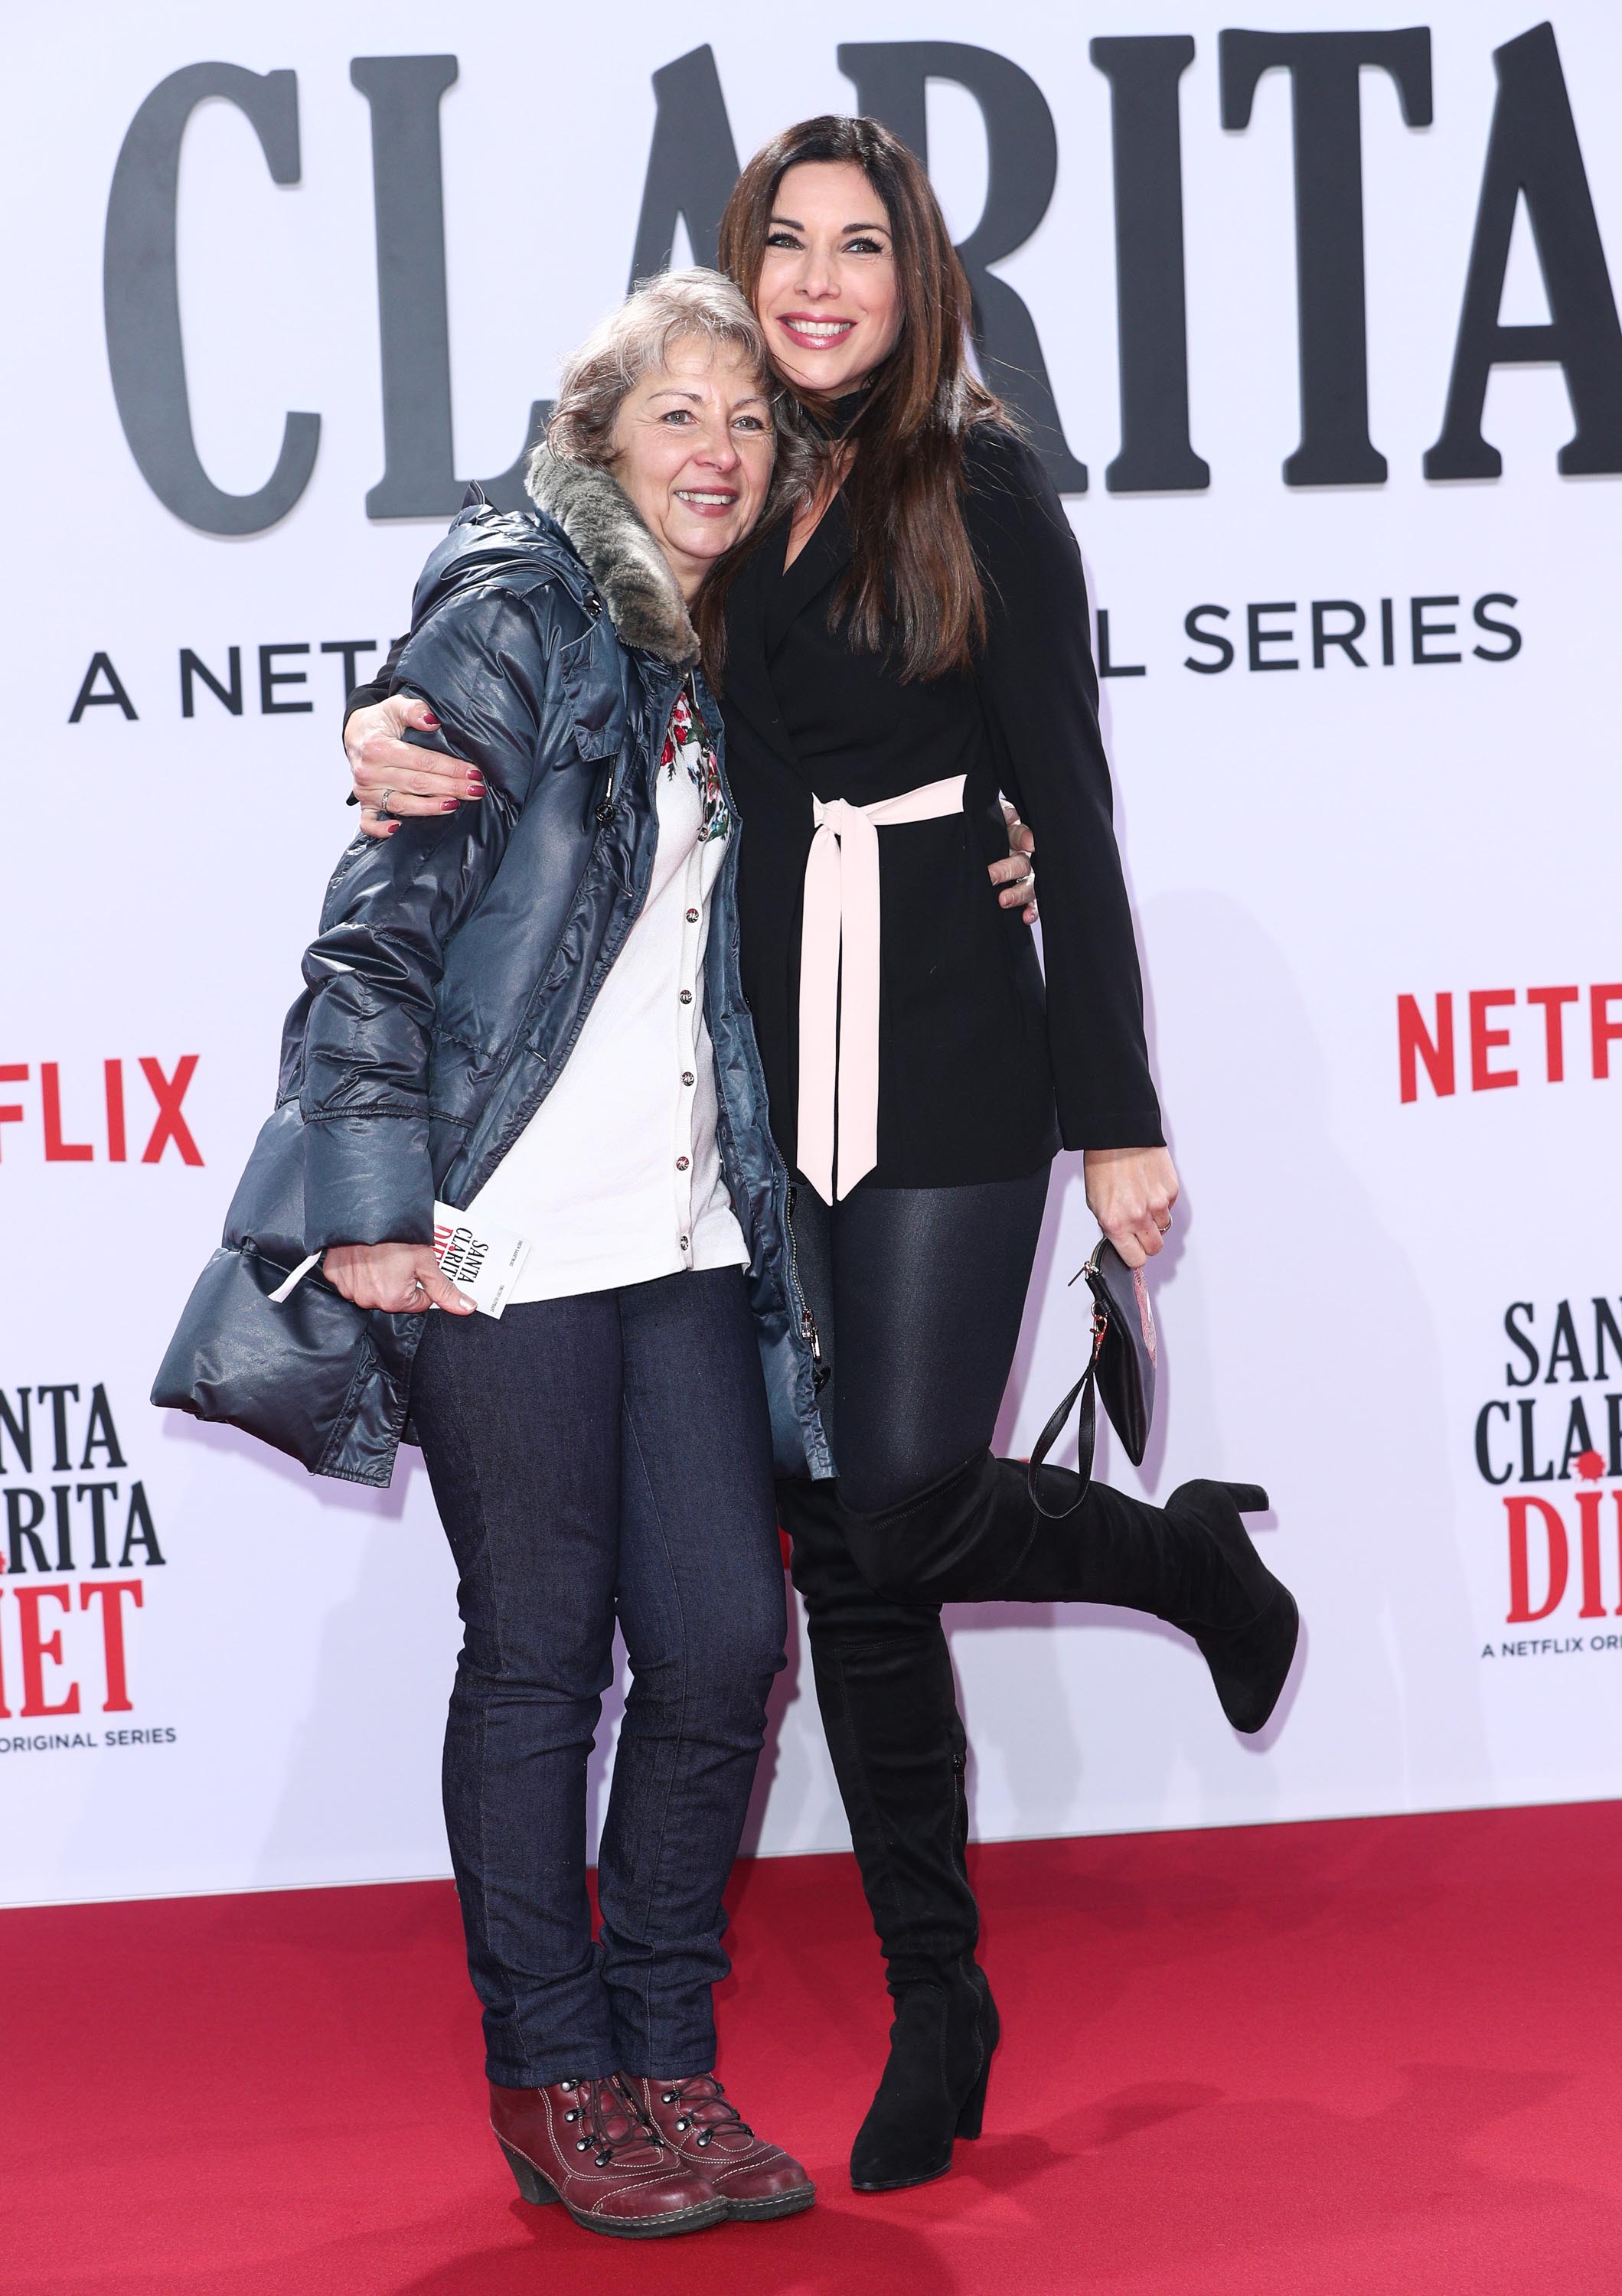 Alexandra Polzin arrives at the premiere of Netflix’s Santa Clarita Diet